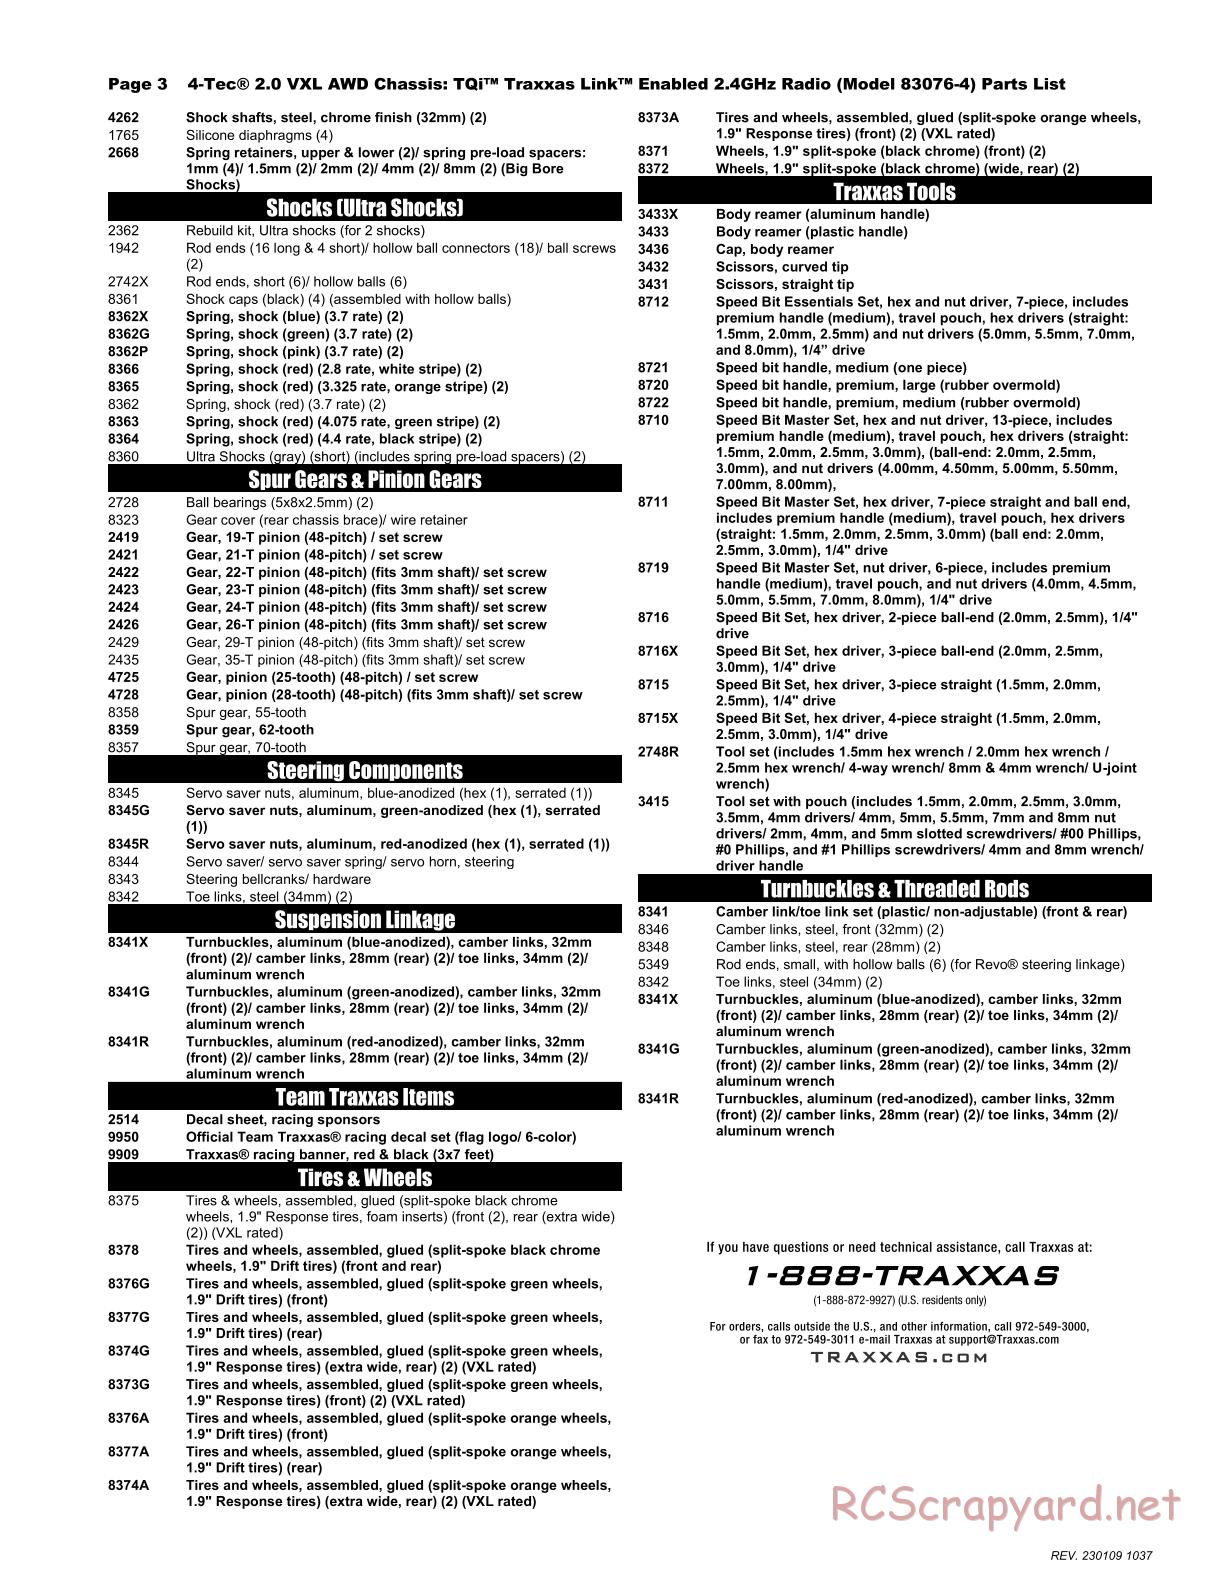 Traxxas - 4-Tec 2.0 VXL (2017) - Parts List - Page 3